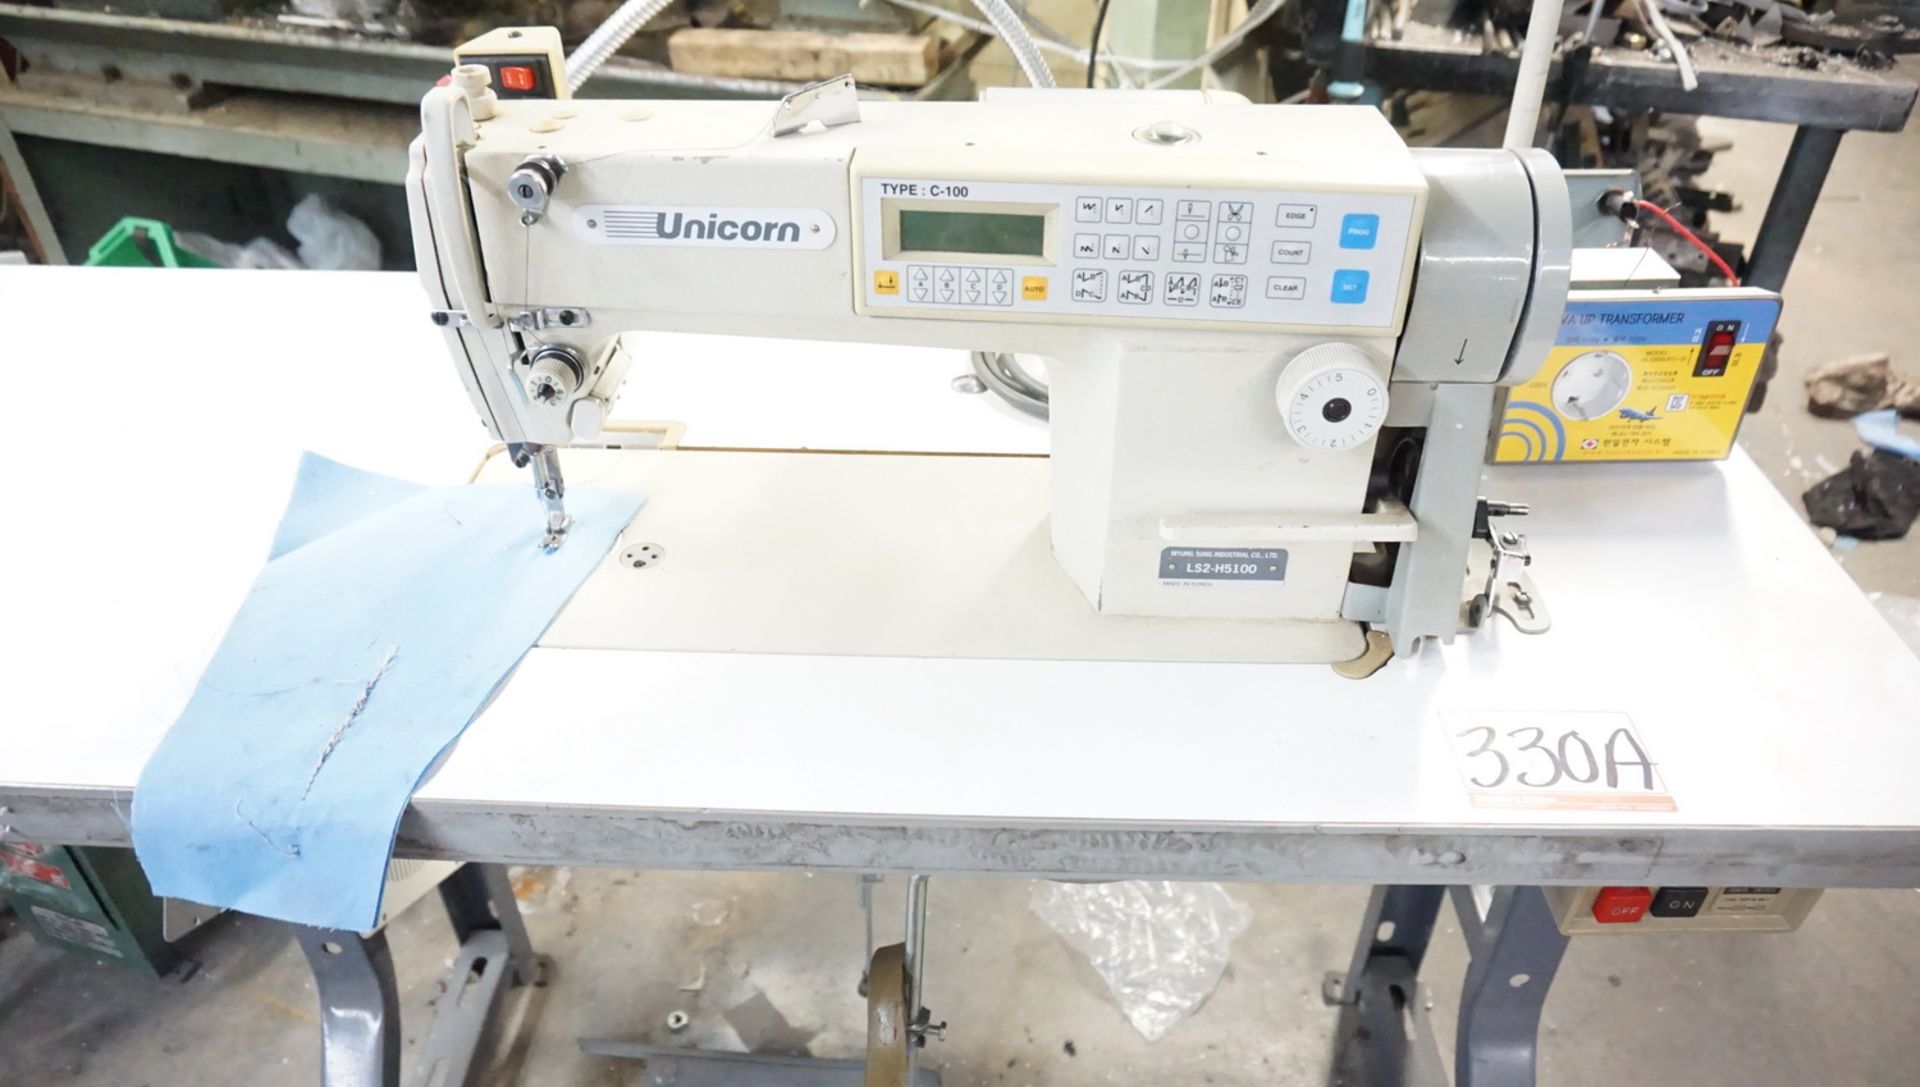 UNICORN LS2-H5100 SINGLE NEEDLE PROGRAMMABLE SEWING MACHINE, S/N 98123627